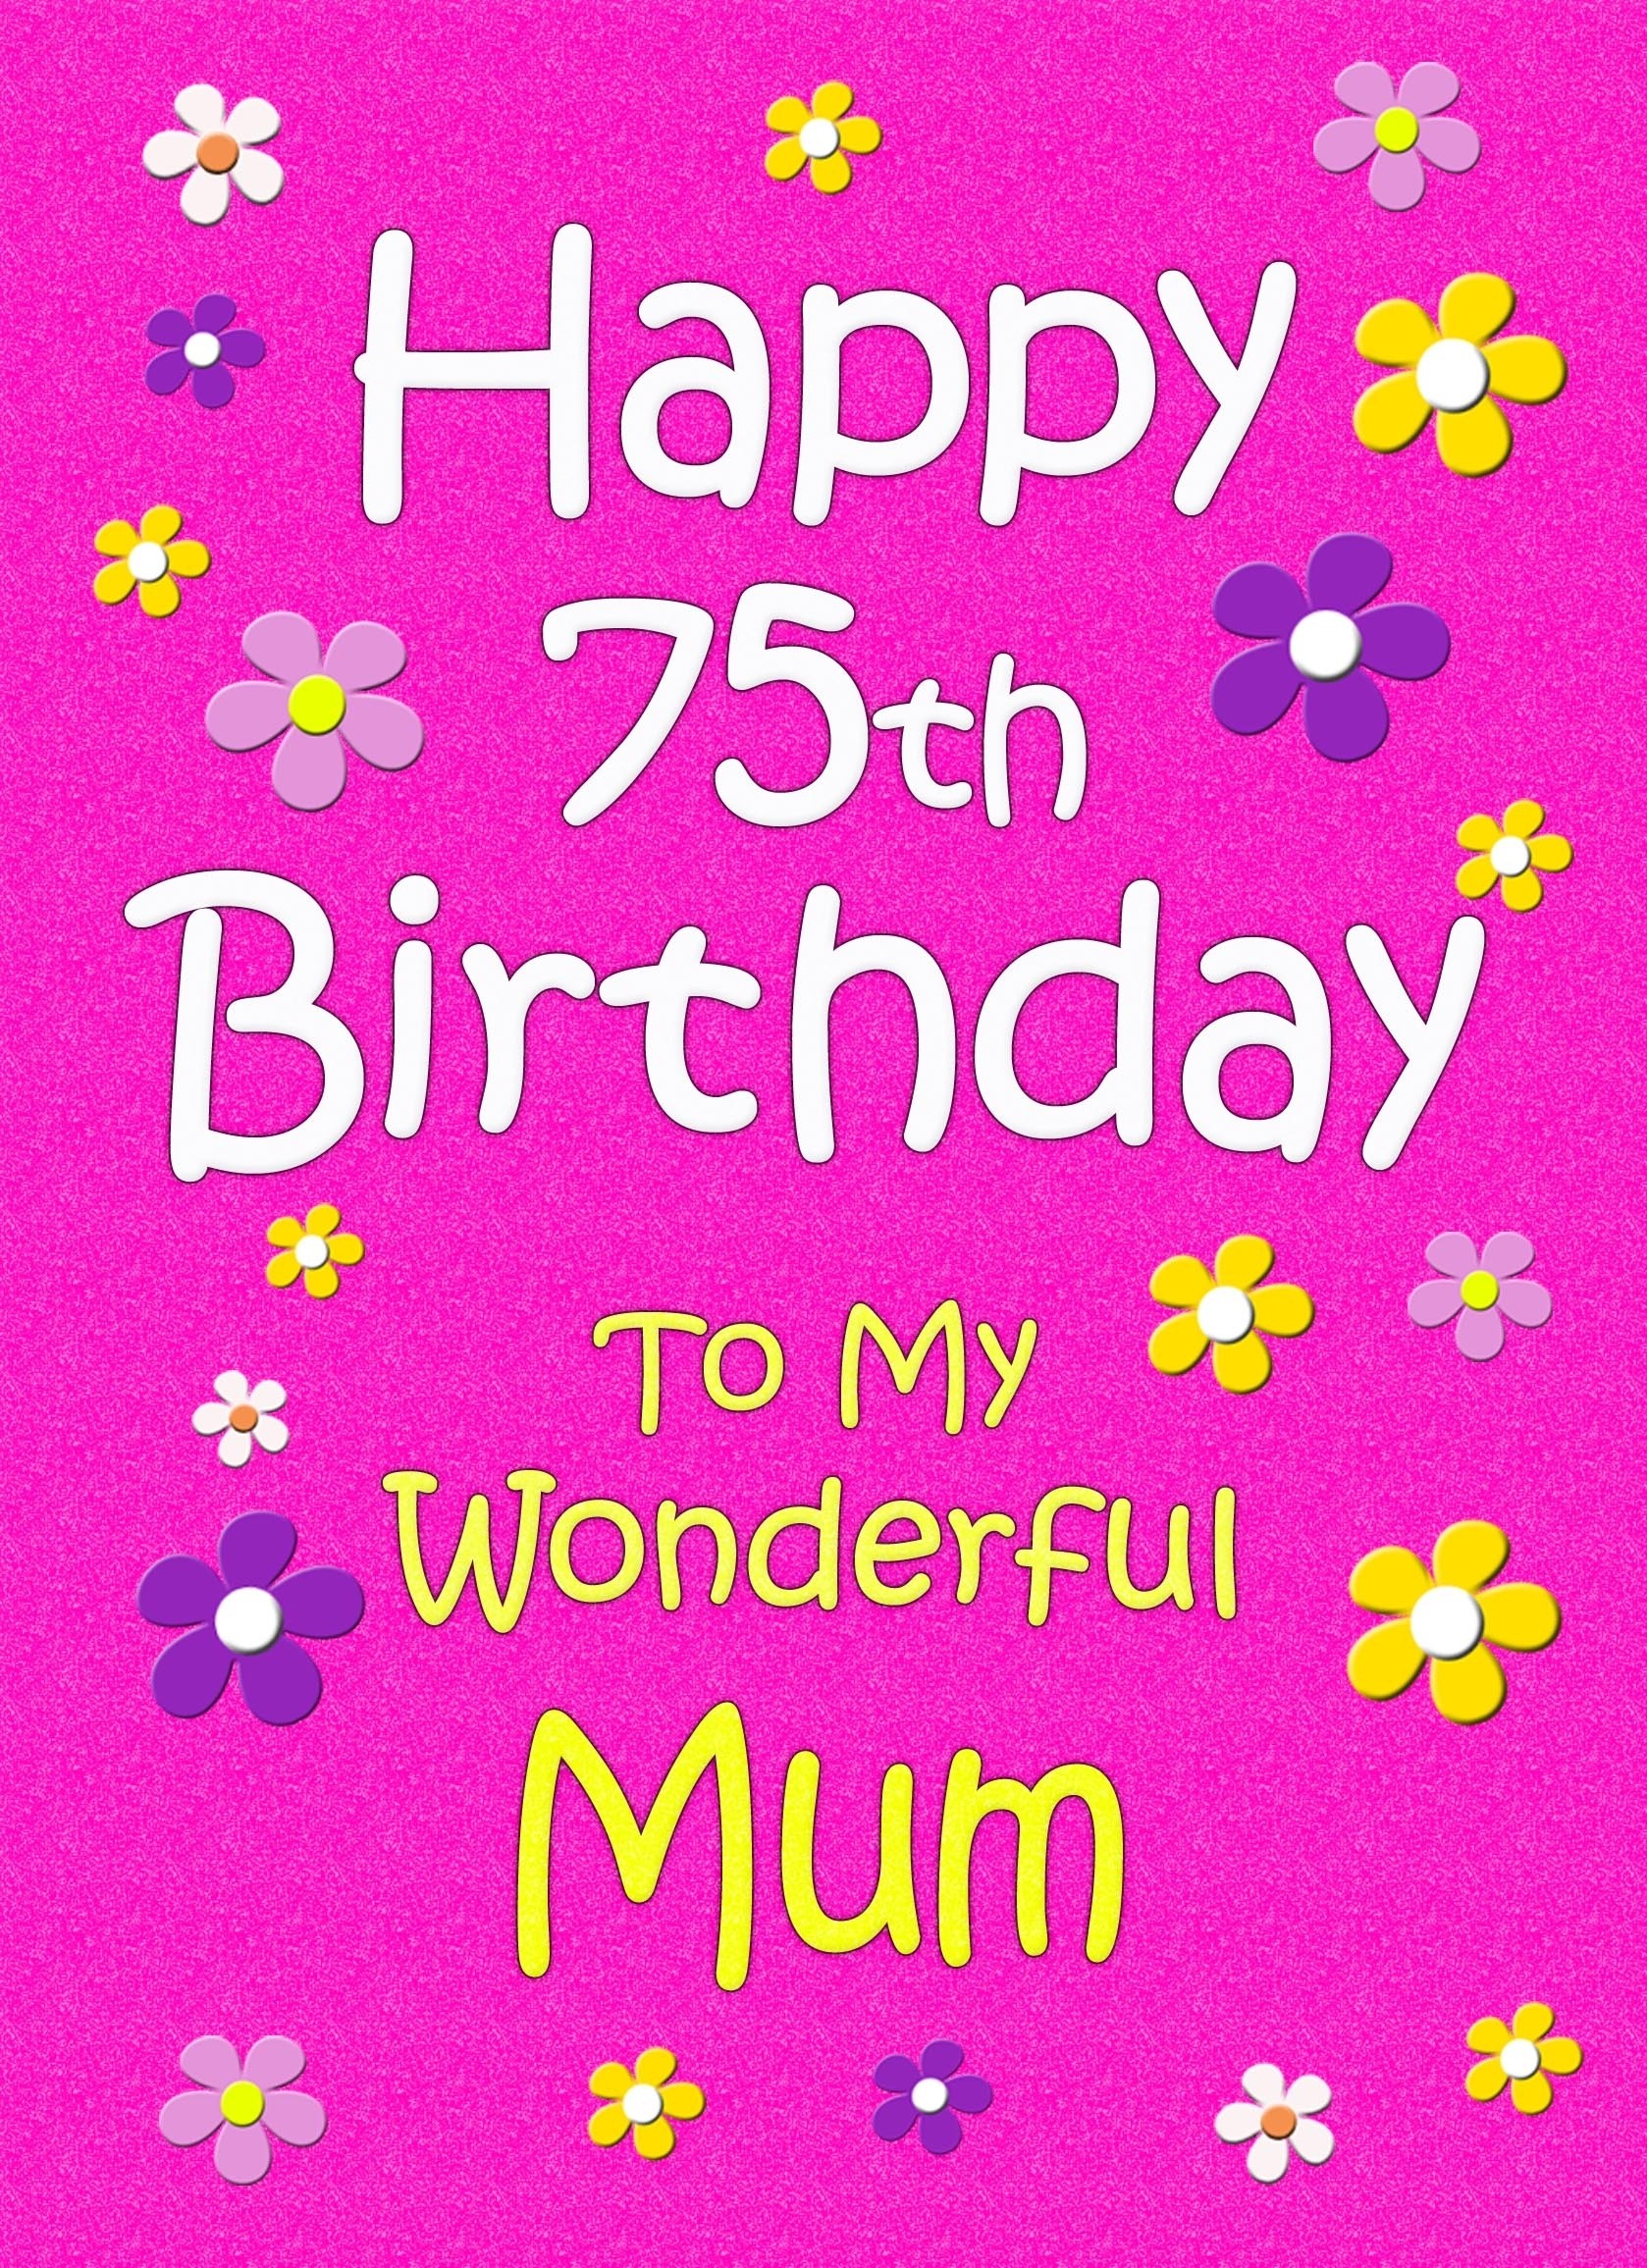 Mum 75th Birthday Card (Pink)